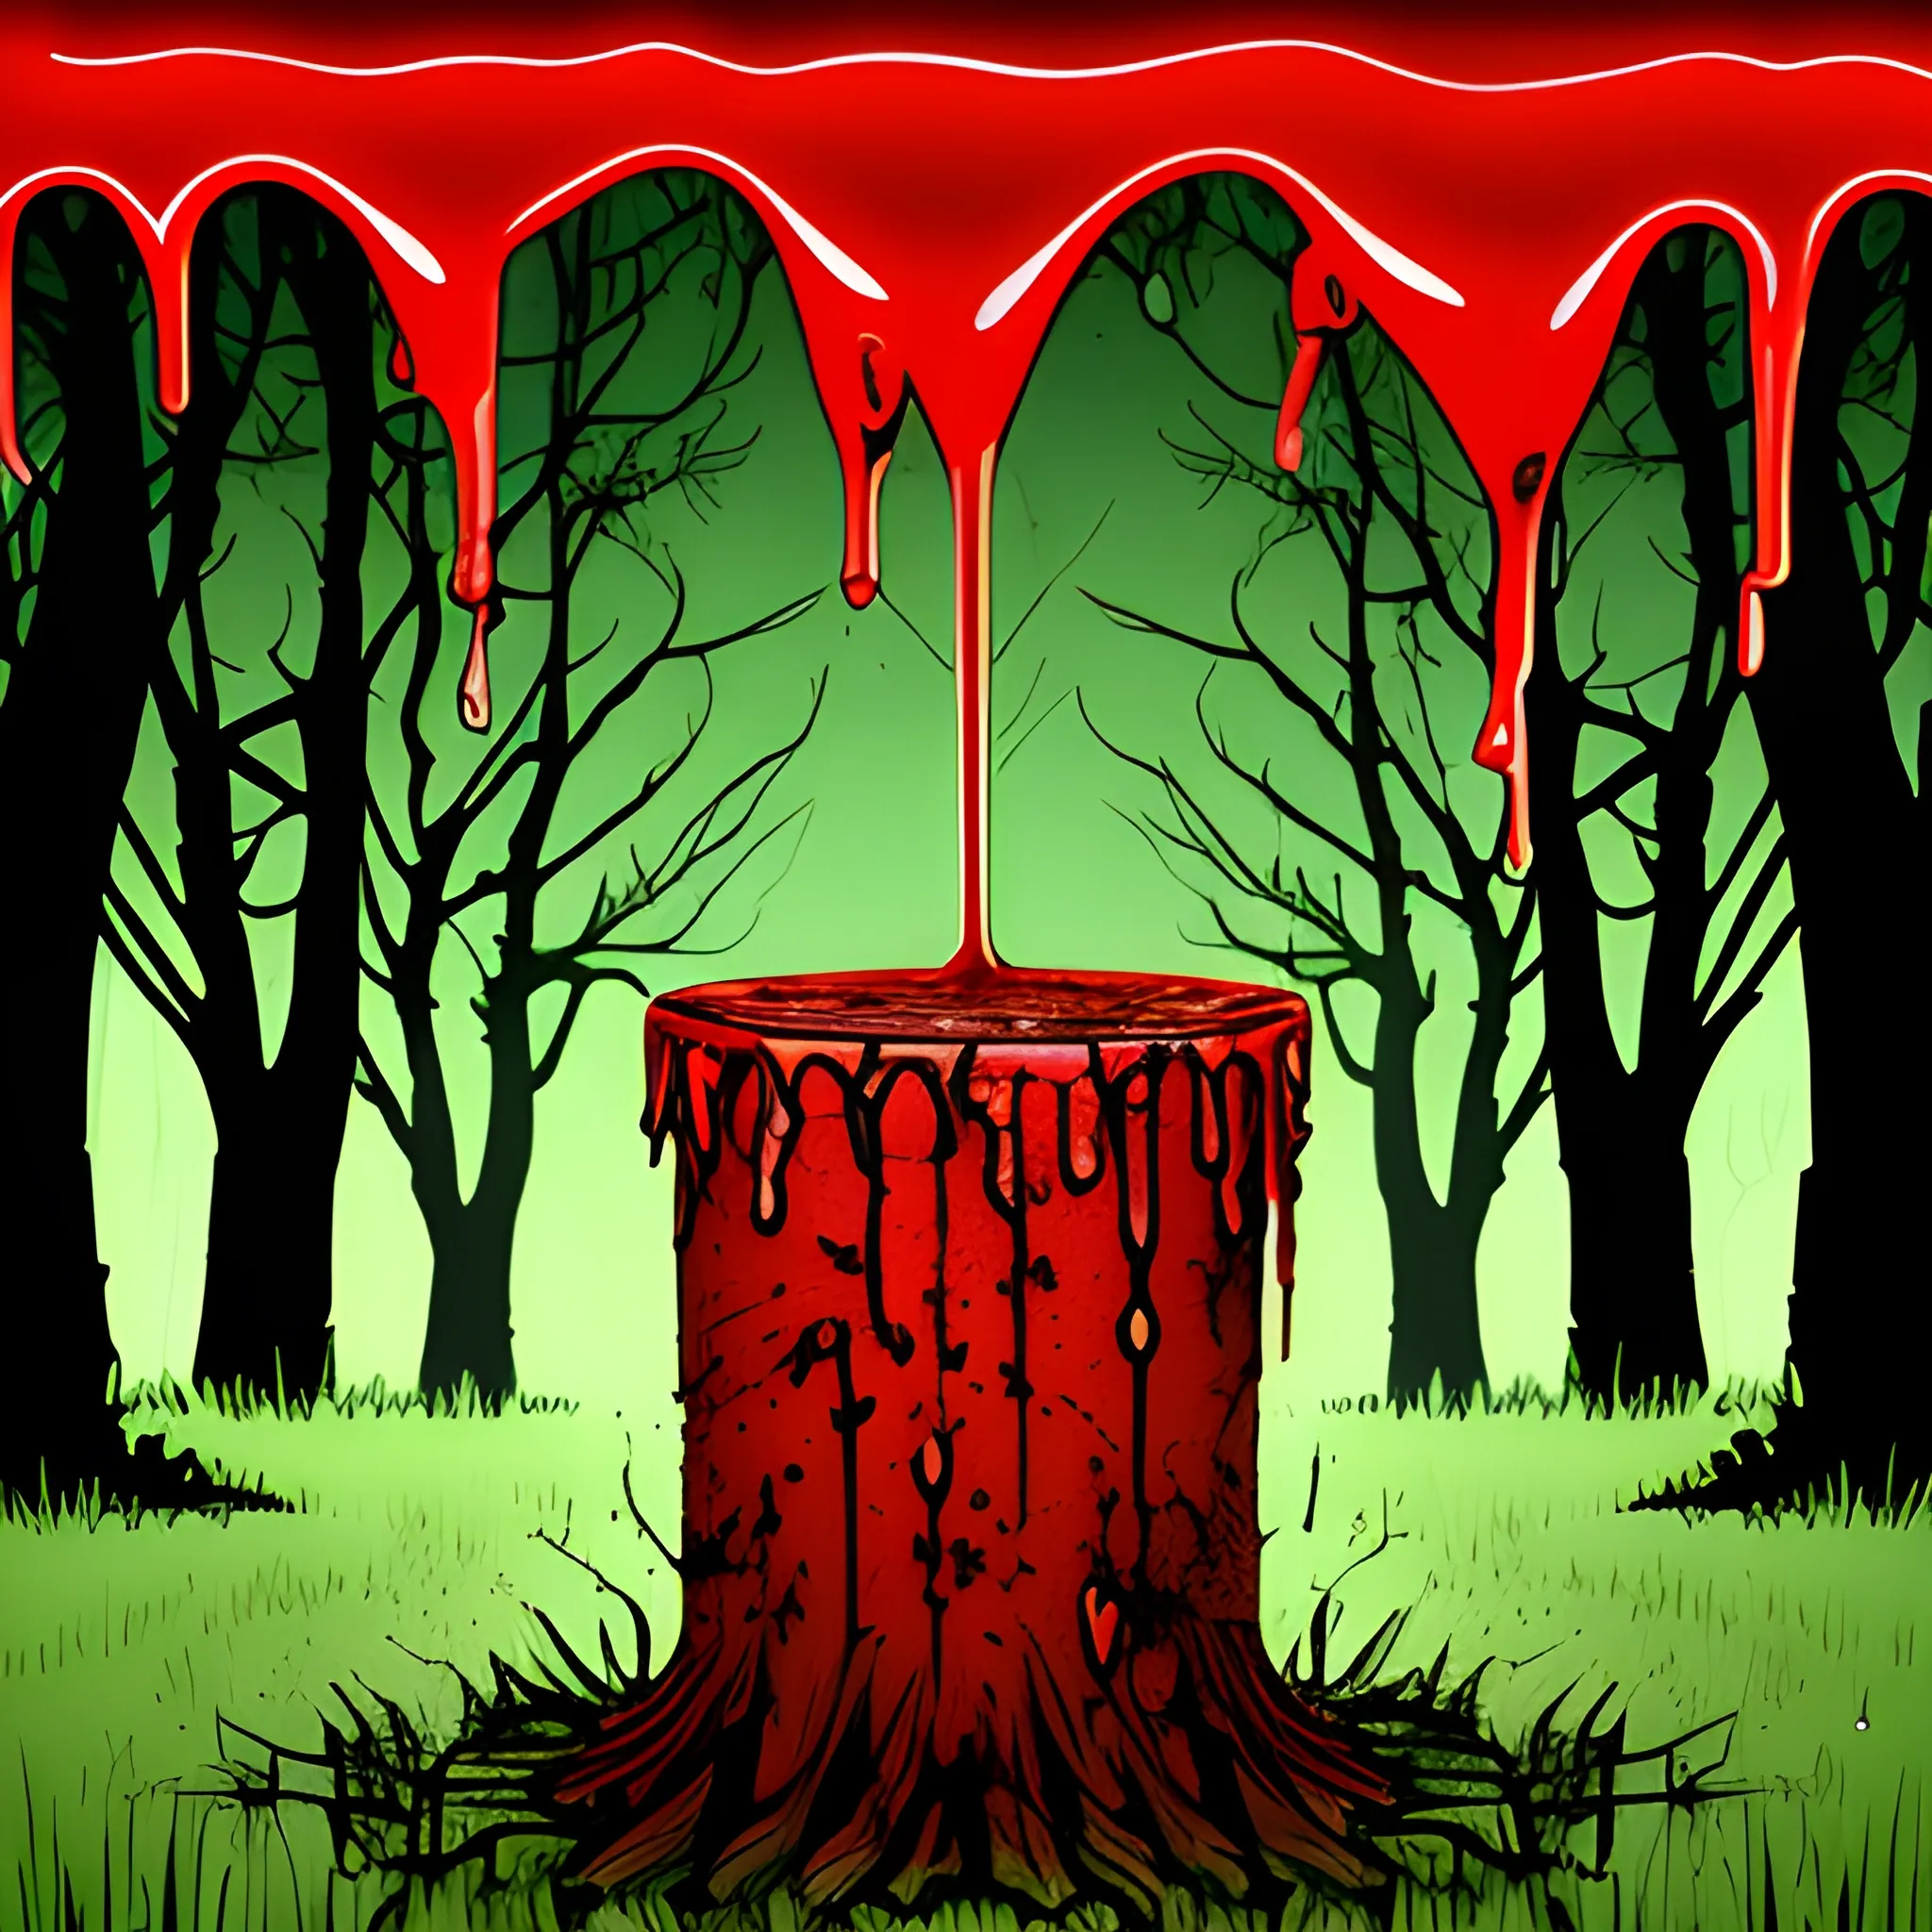 Bloody zombie blood dripping, forest background, hyper deformed, Cartoon, Trippy